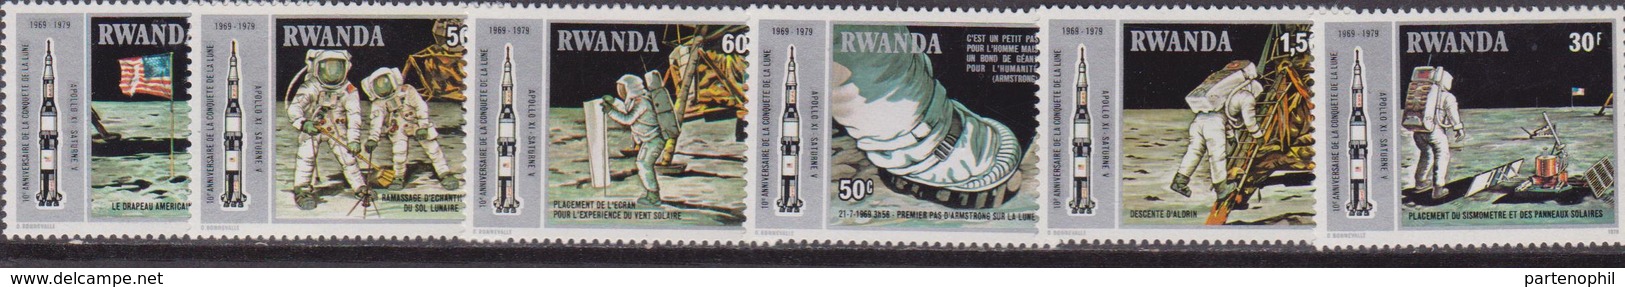 Rwanda 1980 Space Apollo 11 Moon Landing Satellite Astronauts Armstrong 6v MNH - Africa